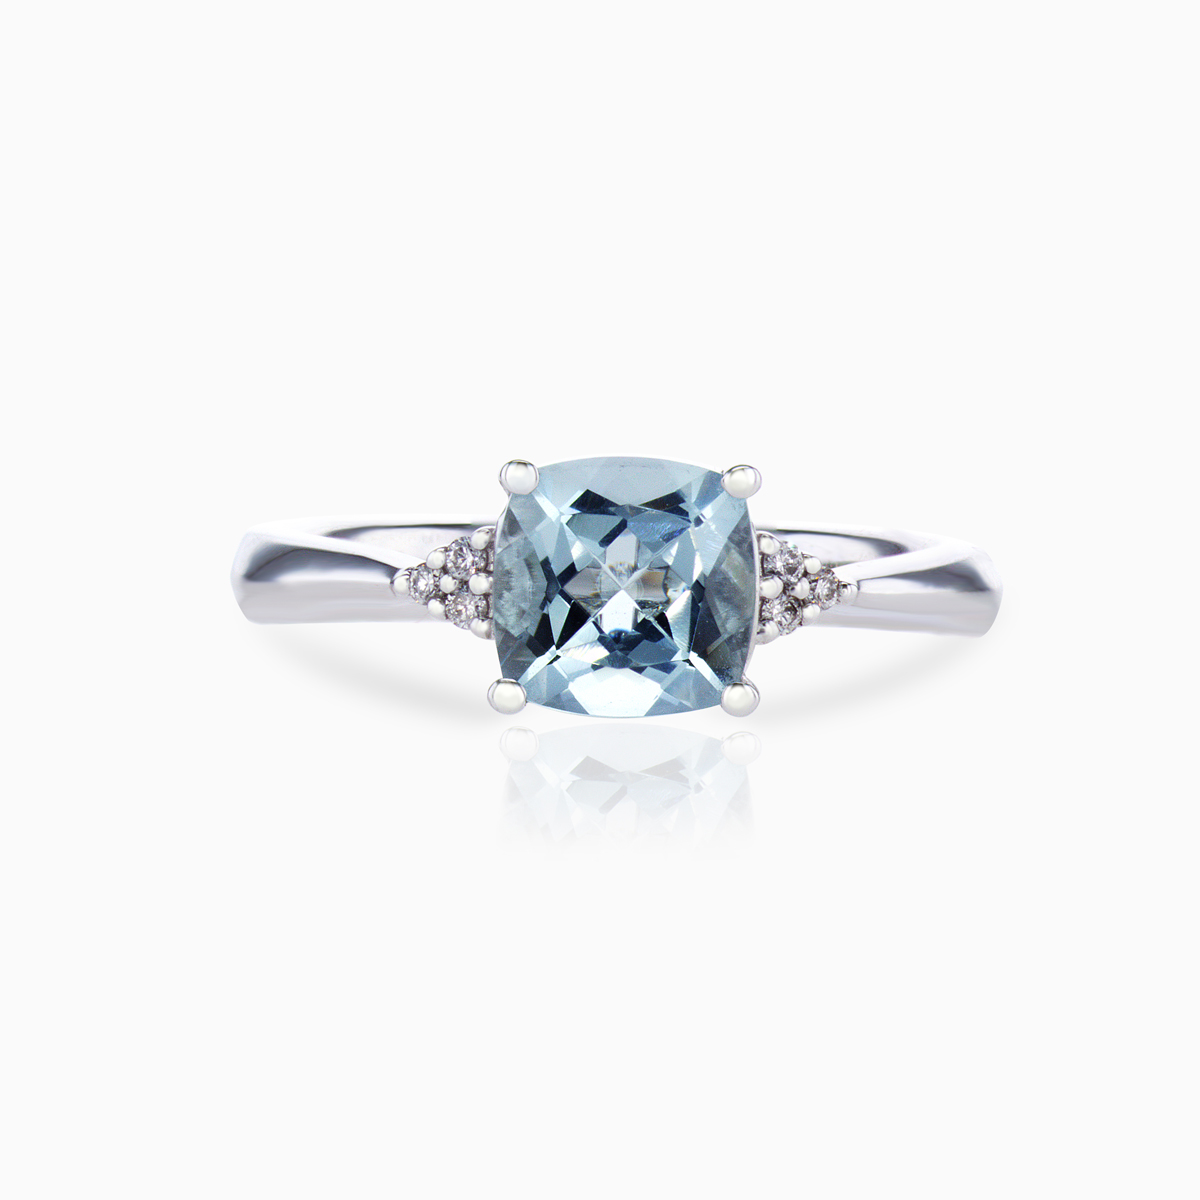 Outstanding Cushion Cut Aquamarine Ring set with Diamonds - Ruby Lane